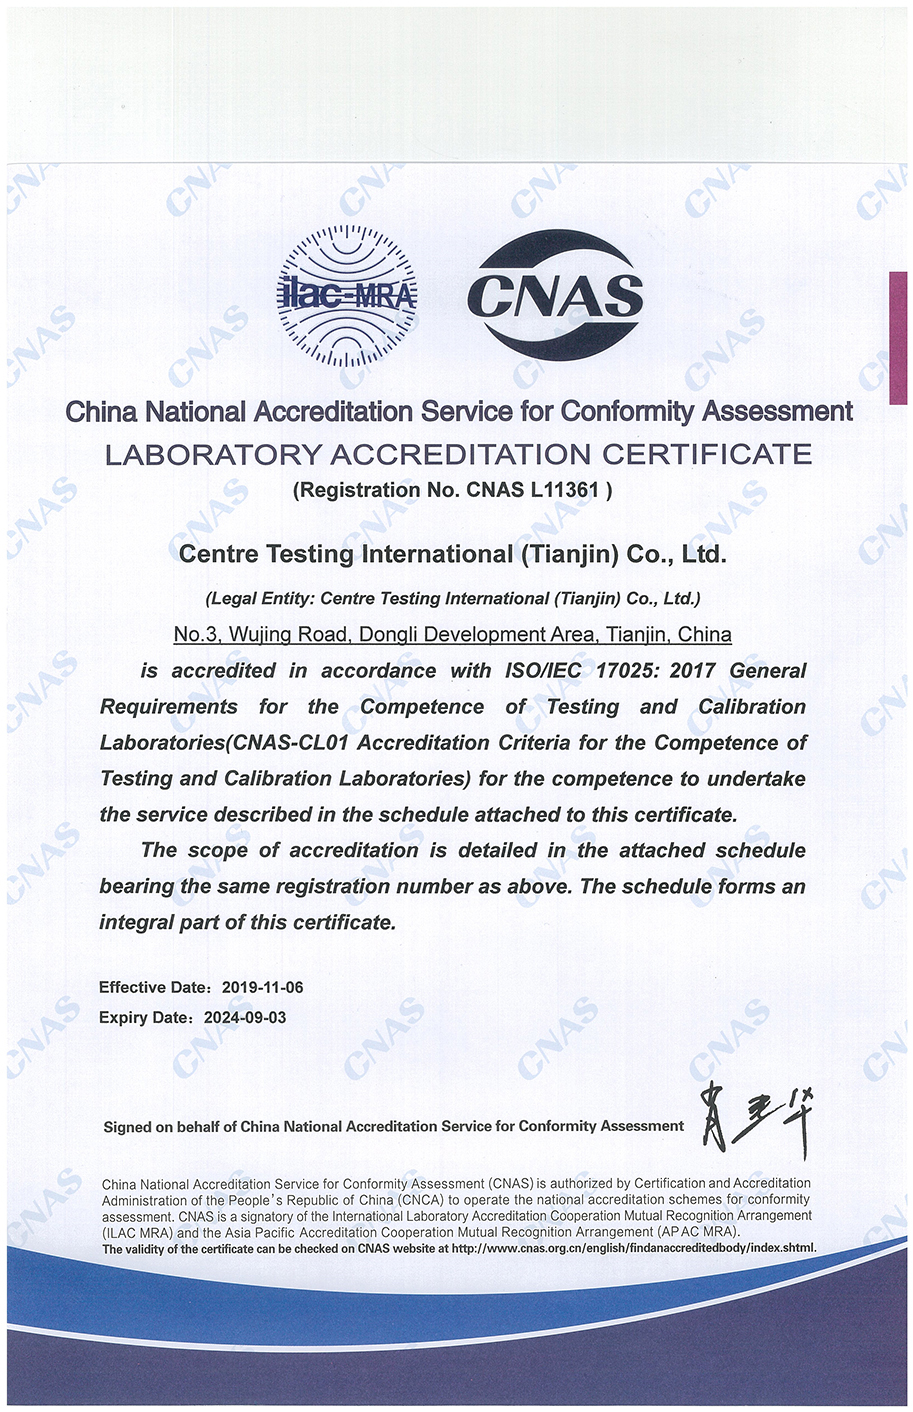 CNAS Certificate-Tianjin ISO/IEC 17025:2017